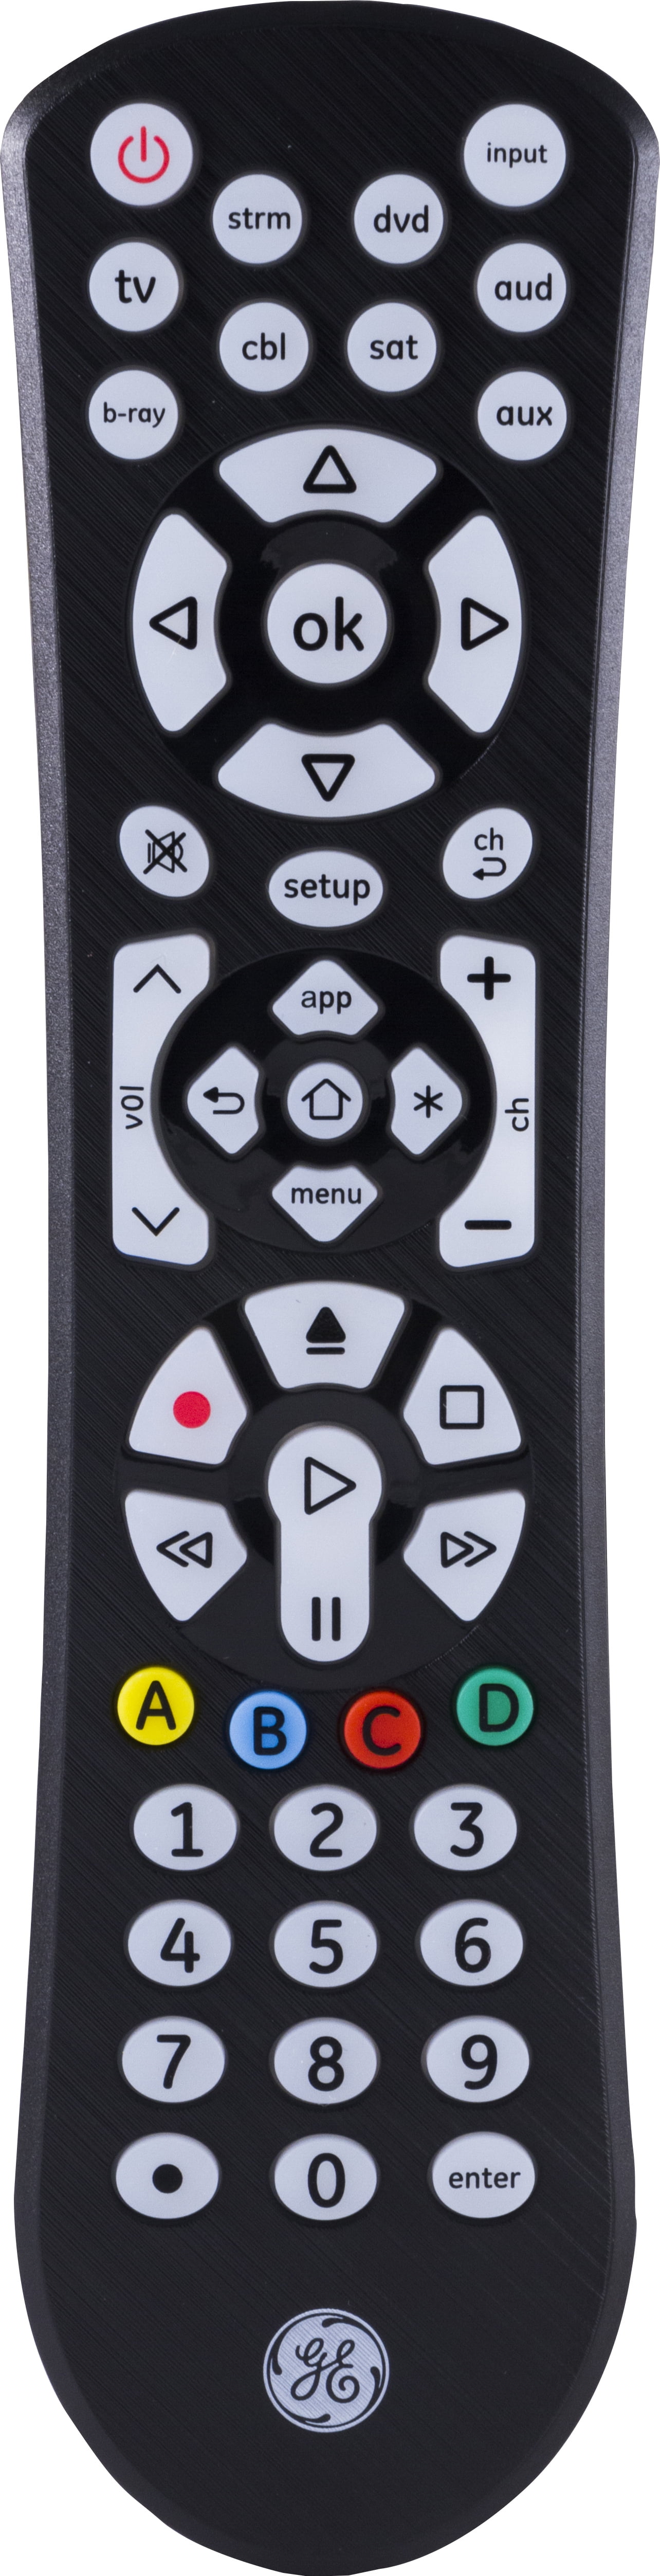 Ge Universal Remote Codes For Roku Stick : Jun 03, 2019 · universal